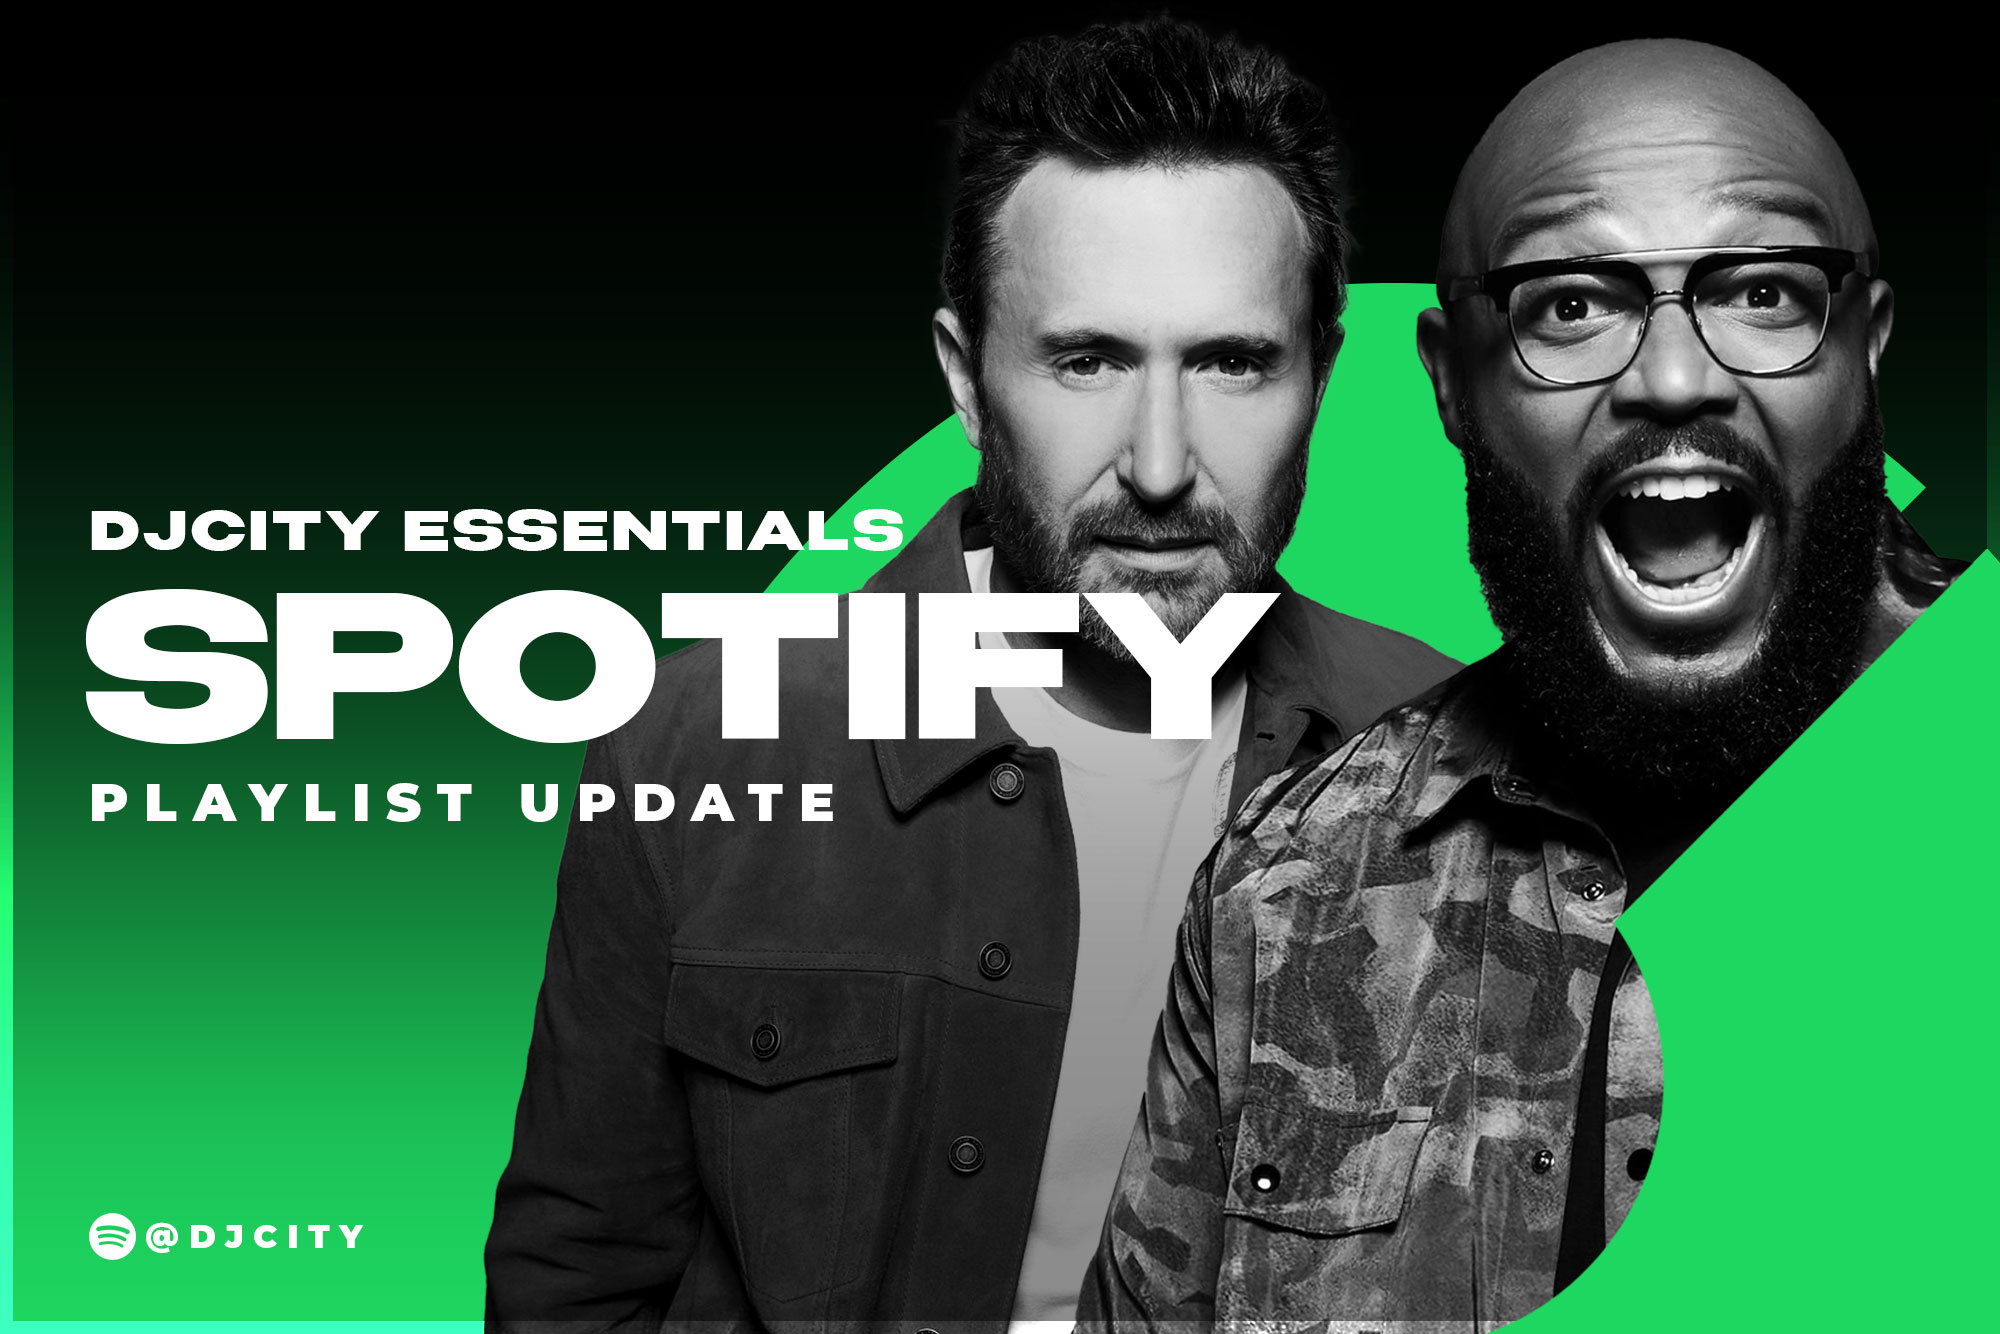 DJcity’s Spotify Playlist Update: Jul. 6